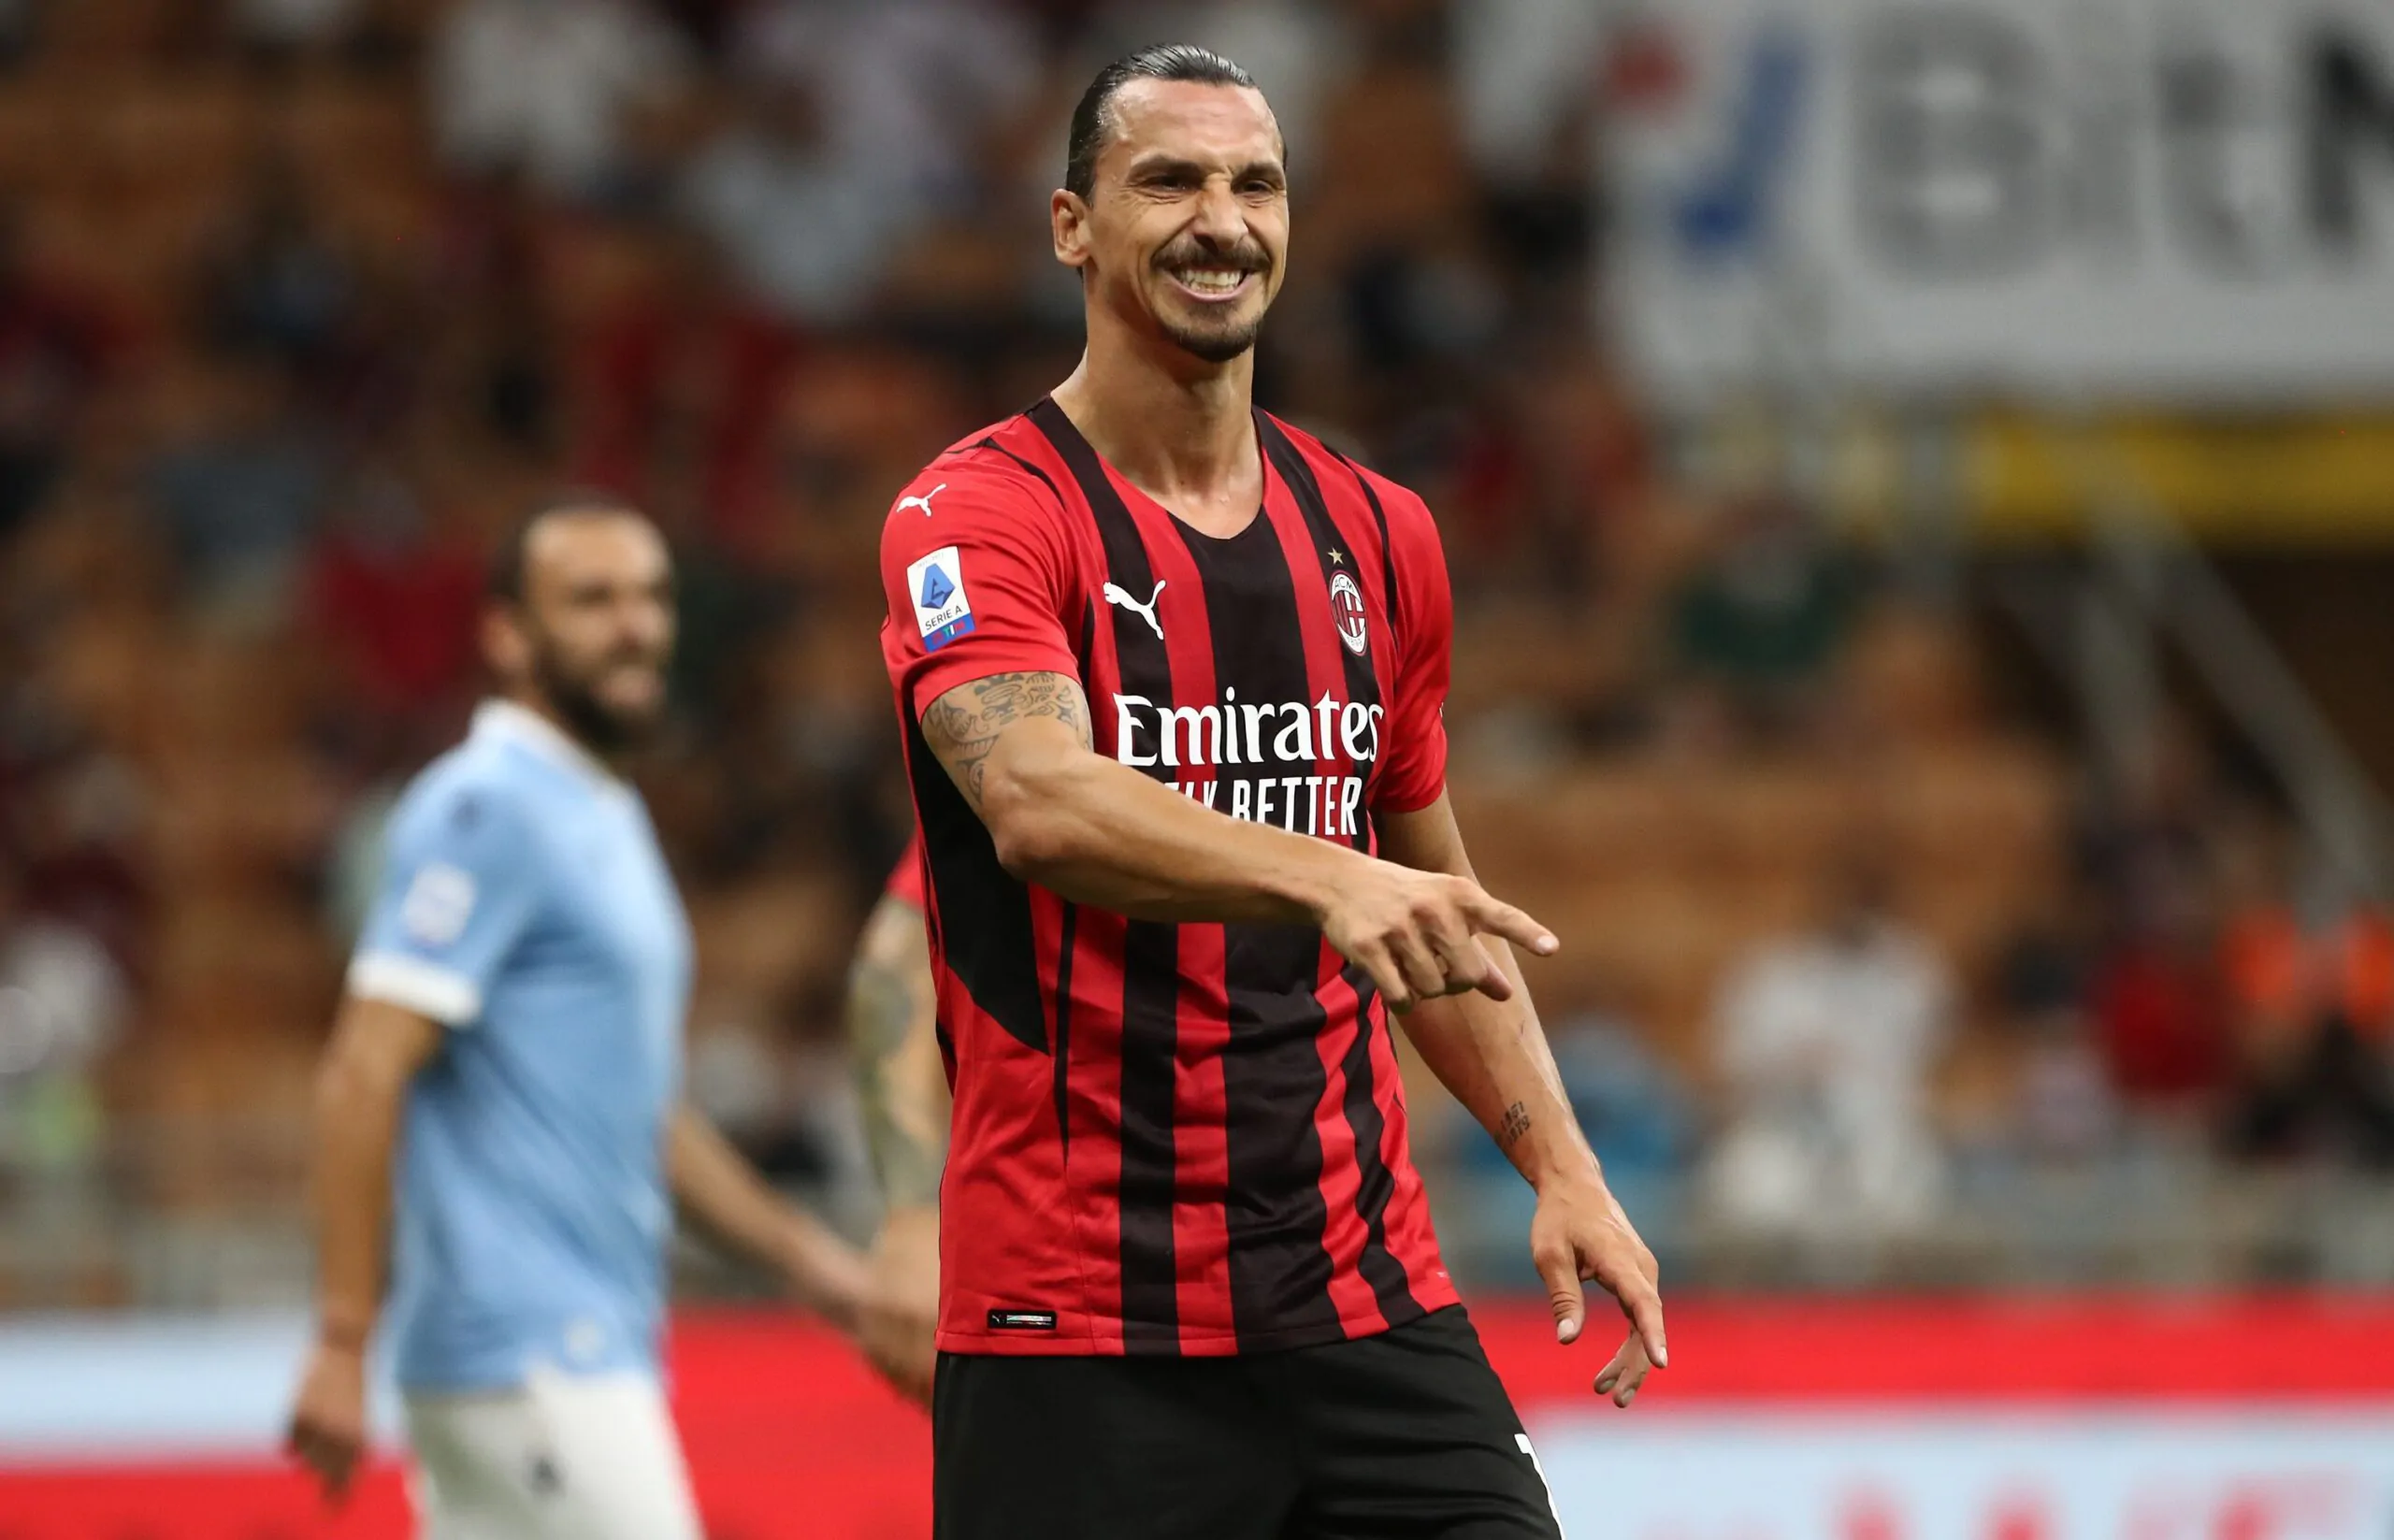 “Milan meritatamente primo”. l’ex giocatore incorona i rossoneri